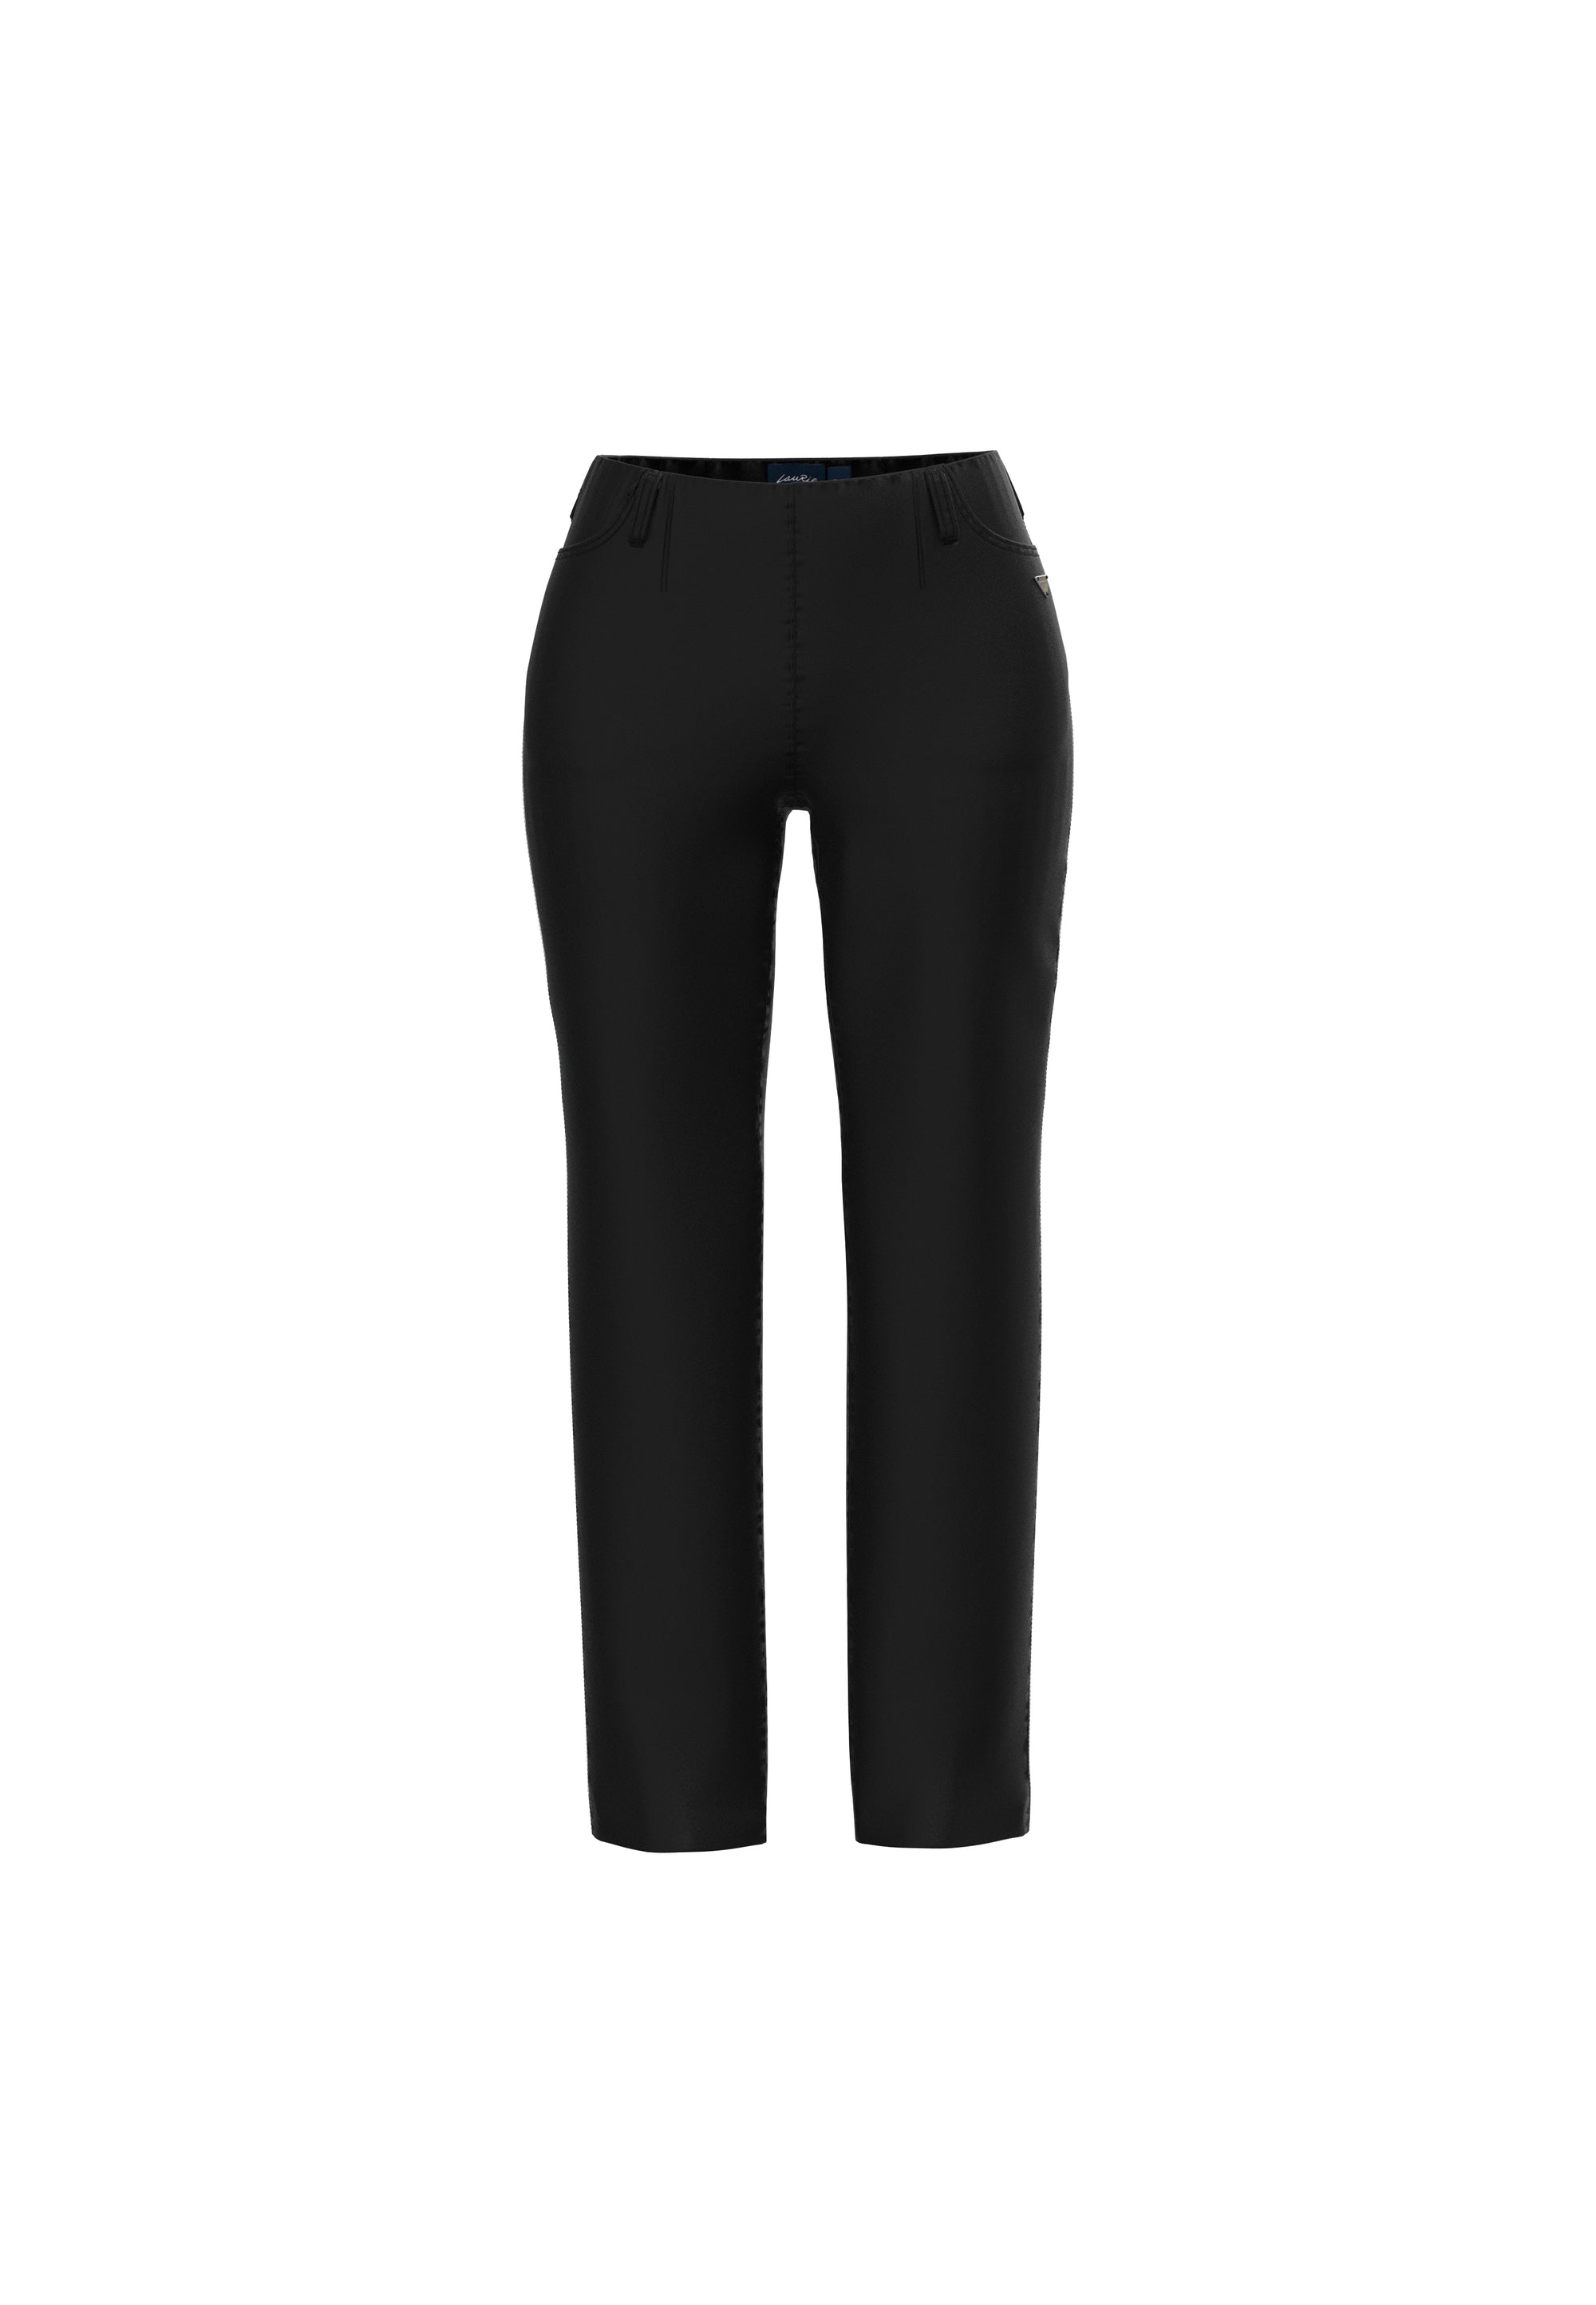 LAURIE Kelly Regular - Medium Length Trousers REGULAR 99970 Black